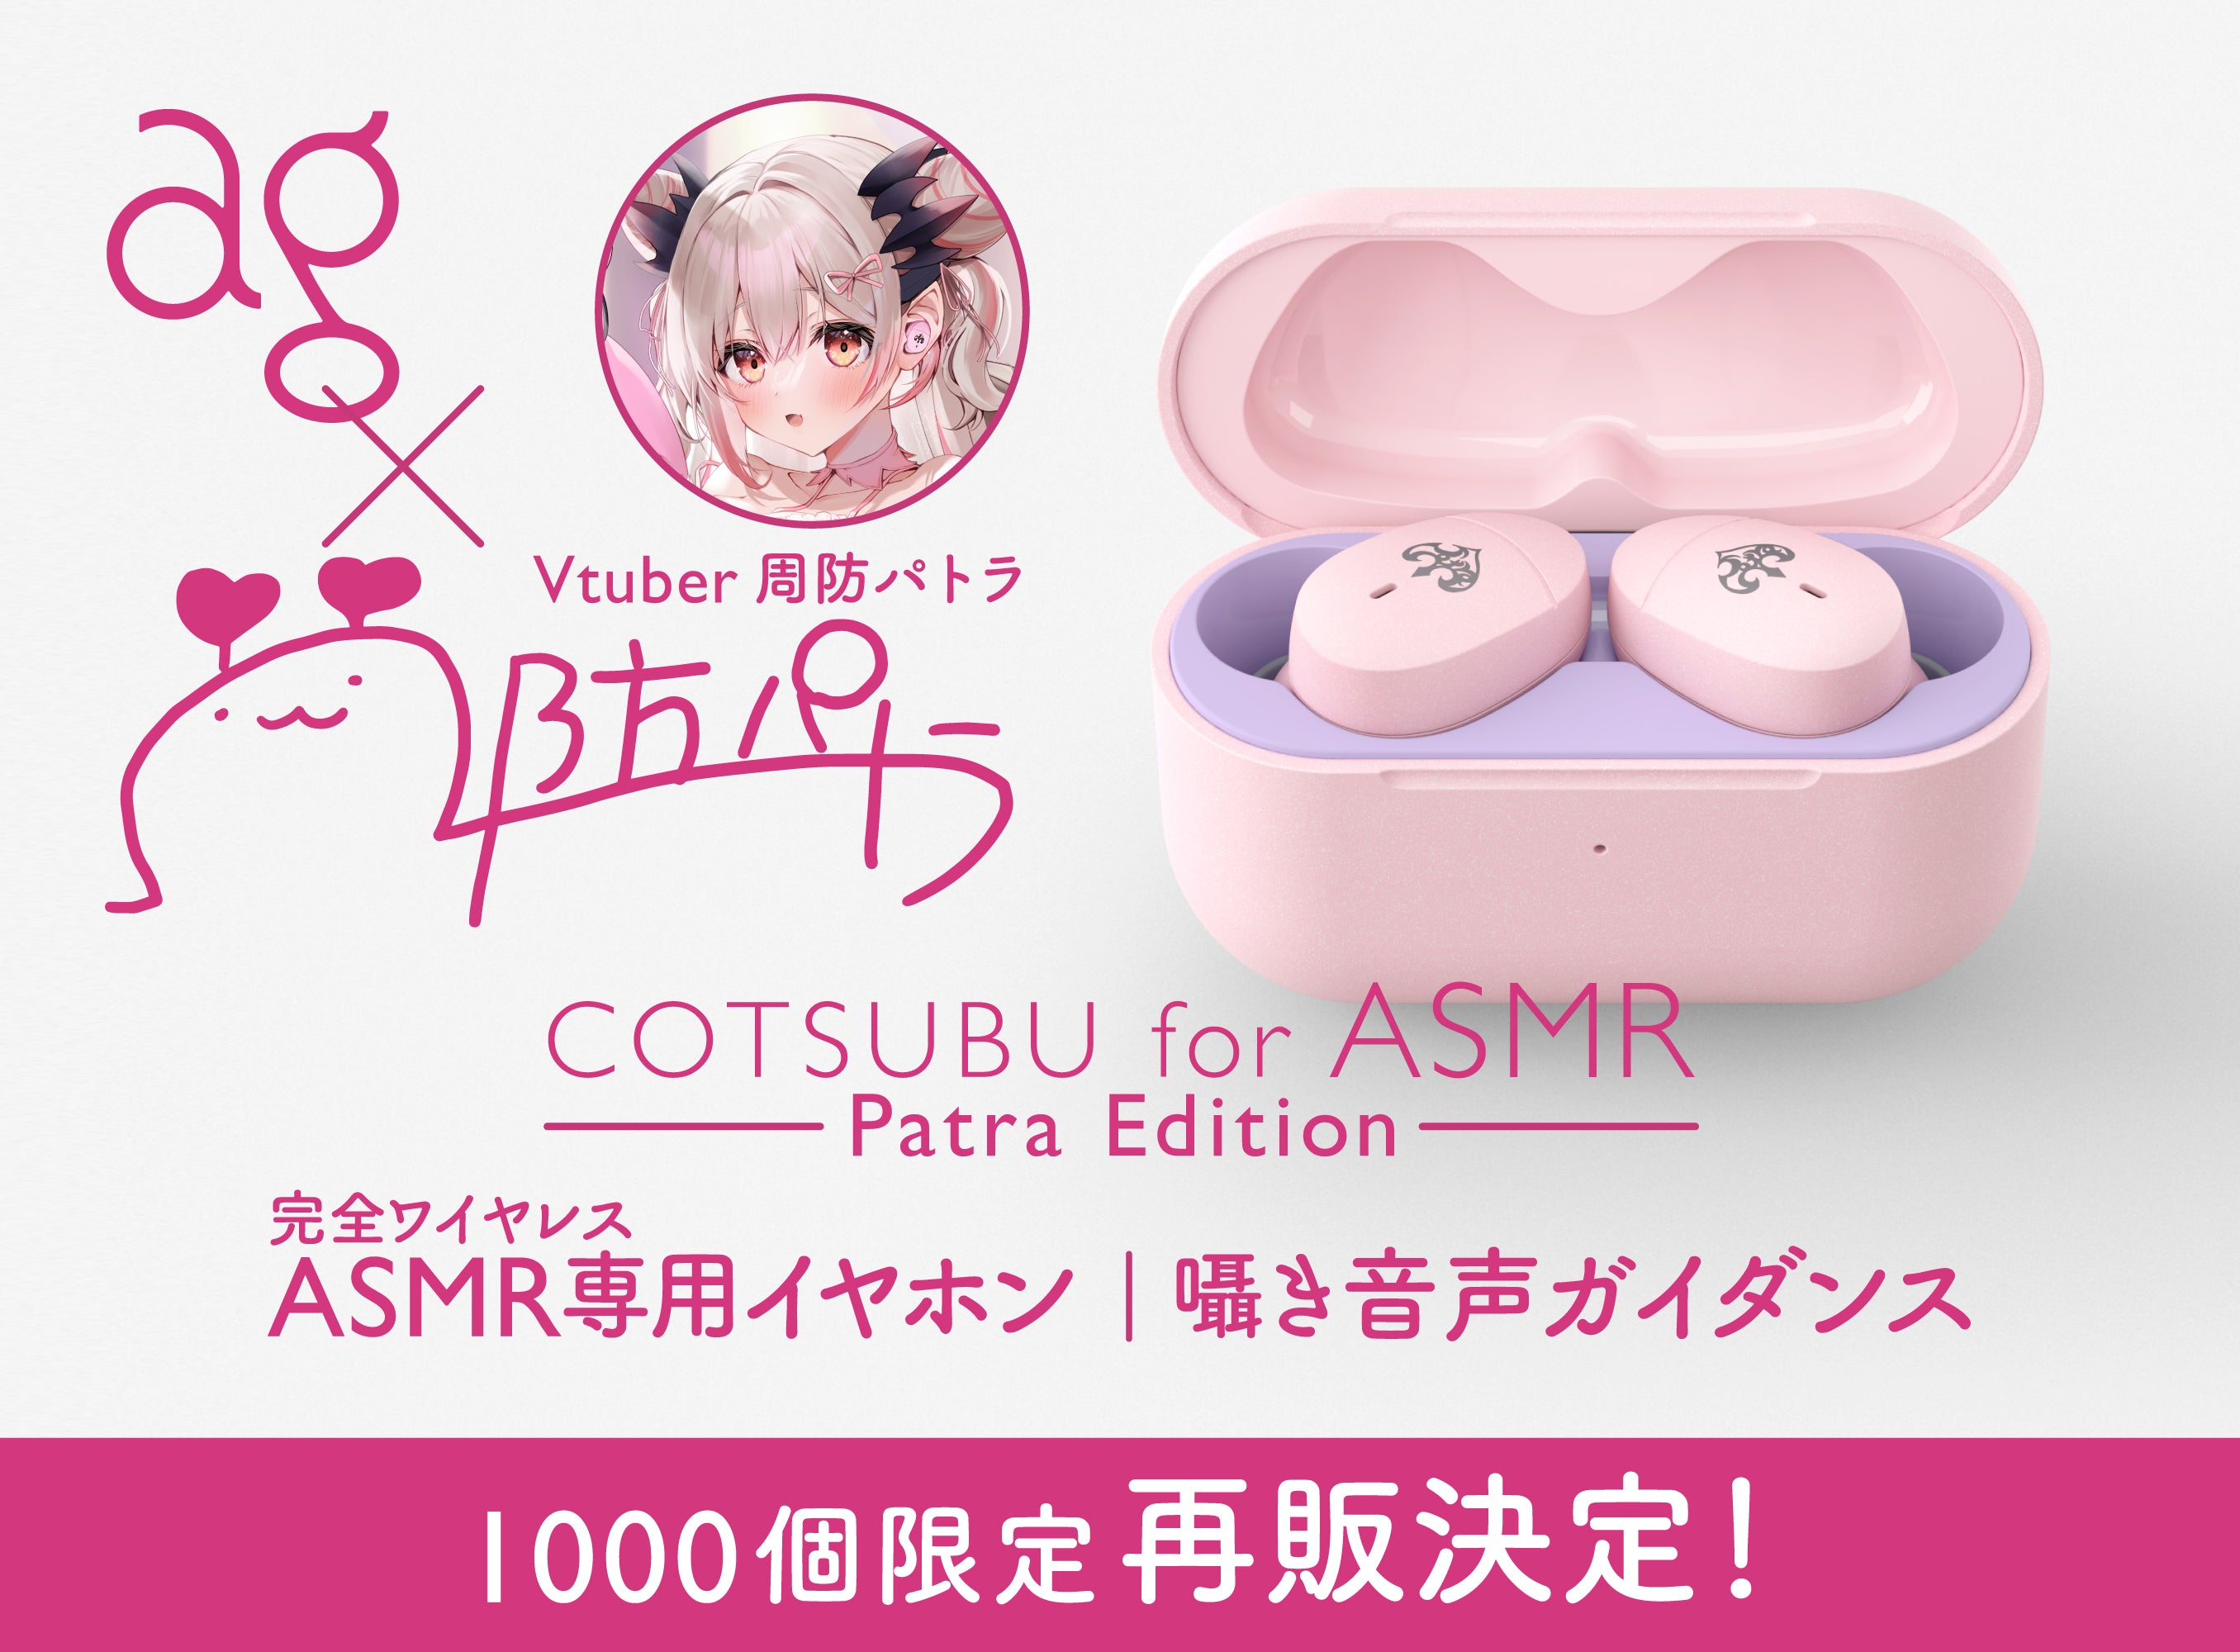 COTSUBU for ASMR Patra Edition 周防パトラ - イヤフォン